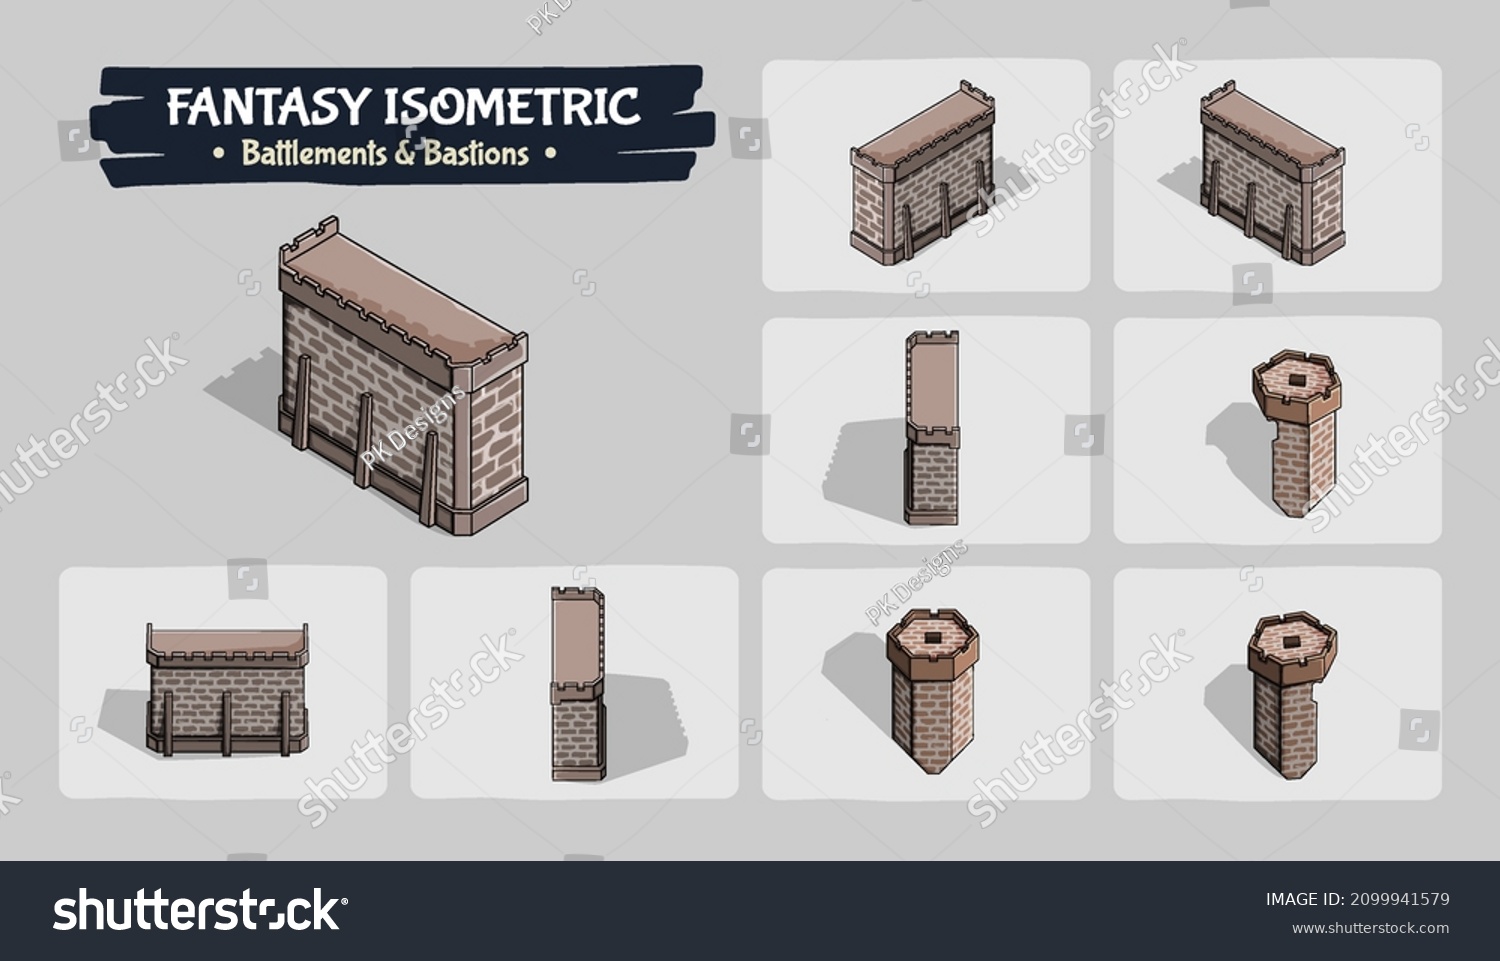 SVG of Battlements and Bastions Fantasy game assets - Isometric Vector Illustration svg